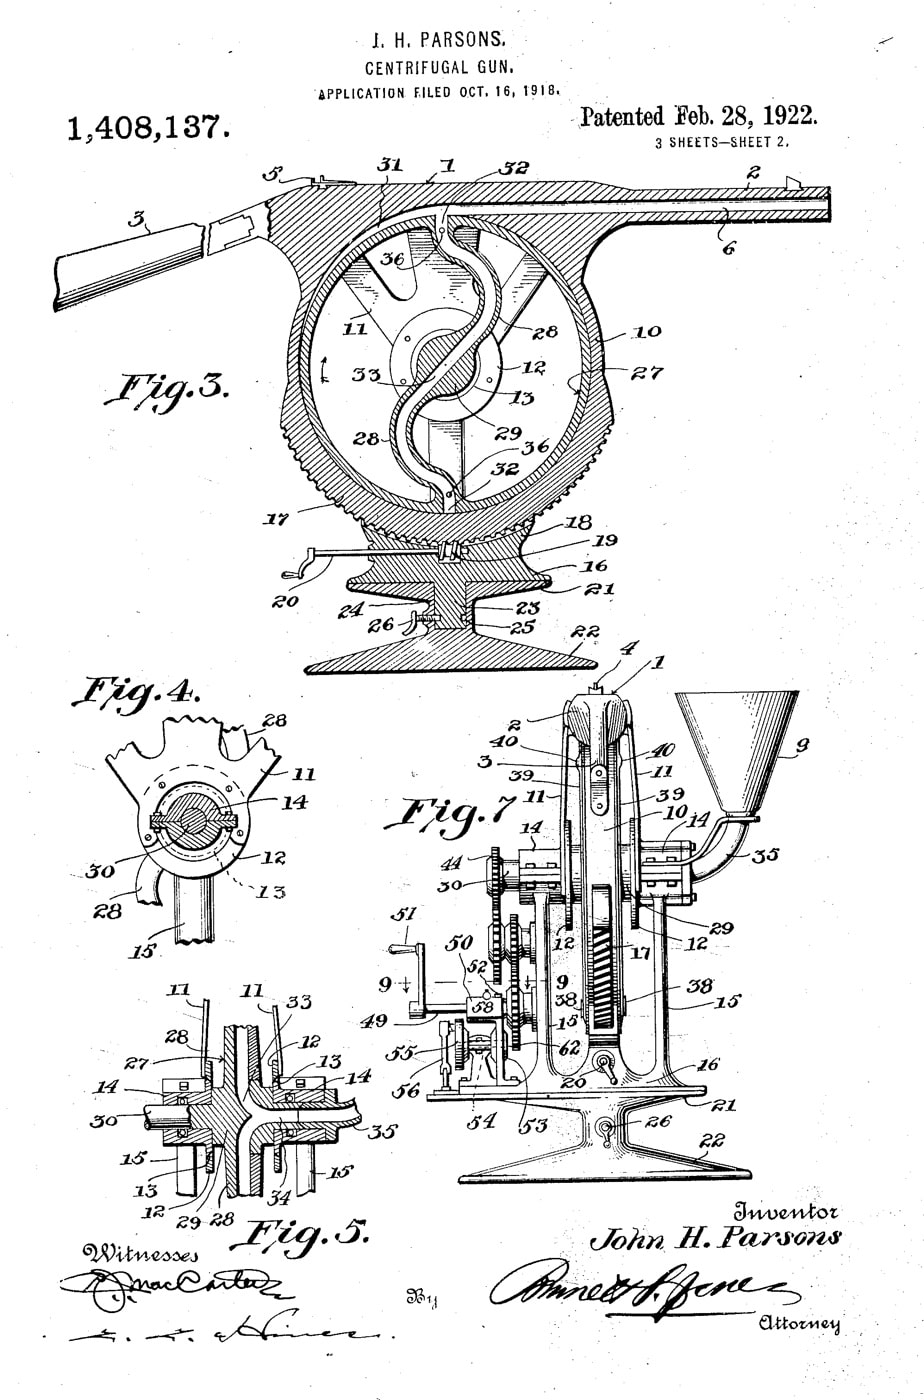 JH Parsons centrifuge gun